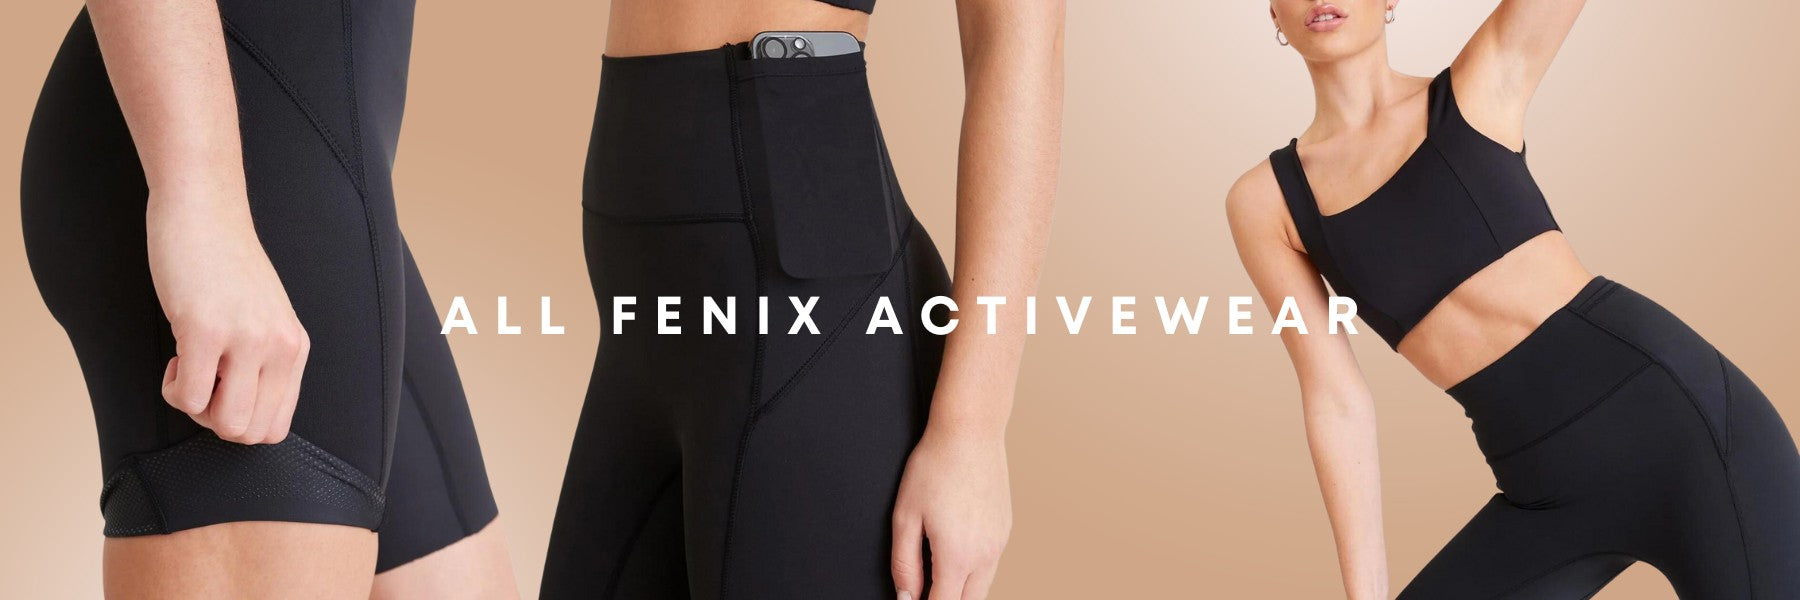 All Fenix Activewear – Contour Clothing